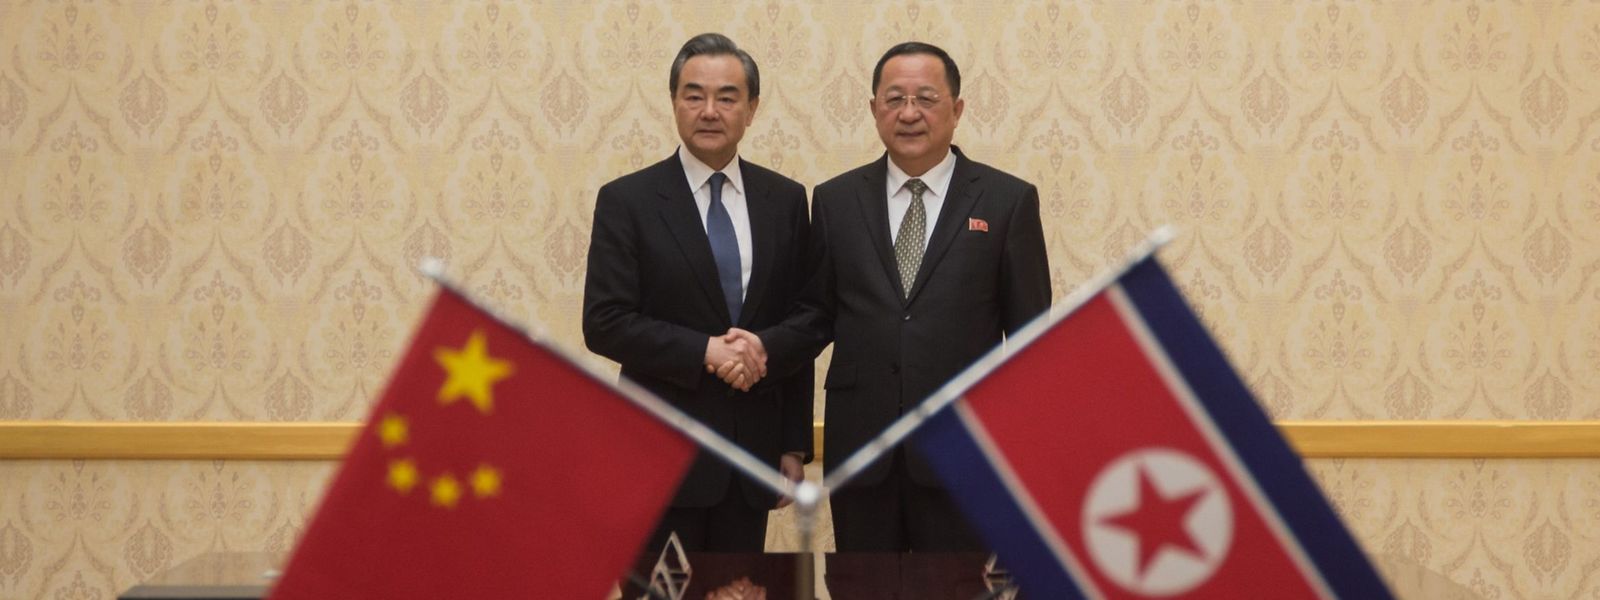 Chinas Außenminister Wang Yi (links) mit seinem nordkoreanischen Amtskollegen Ri Yong Ho.